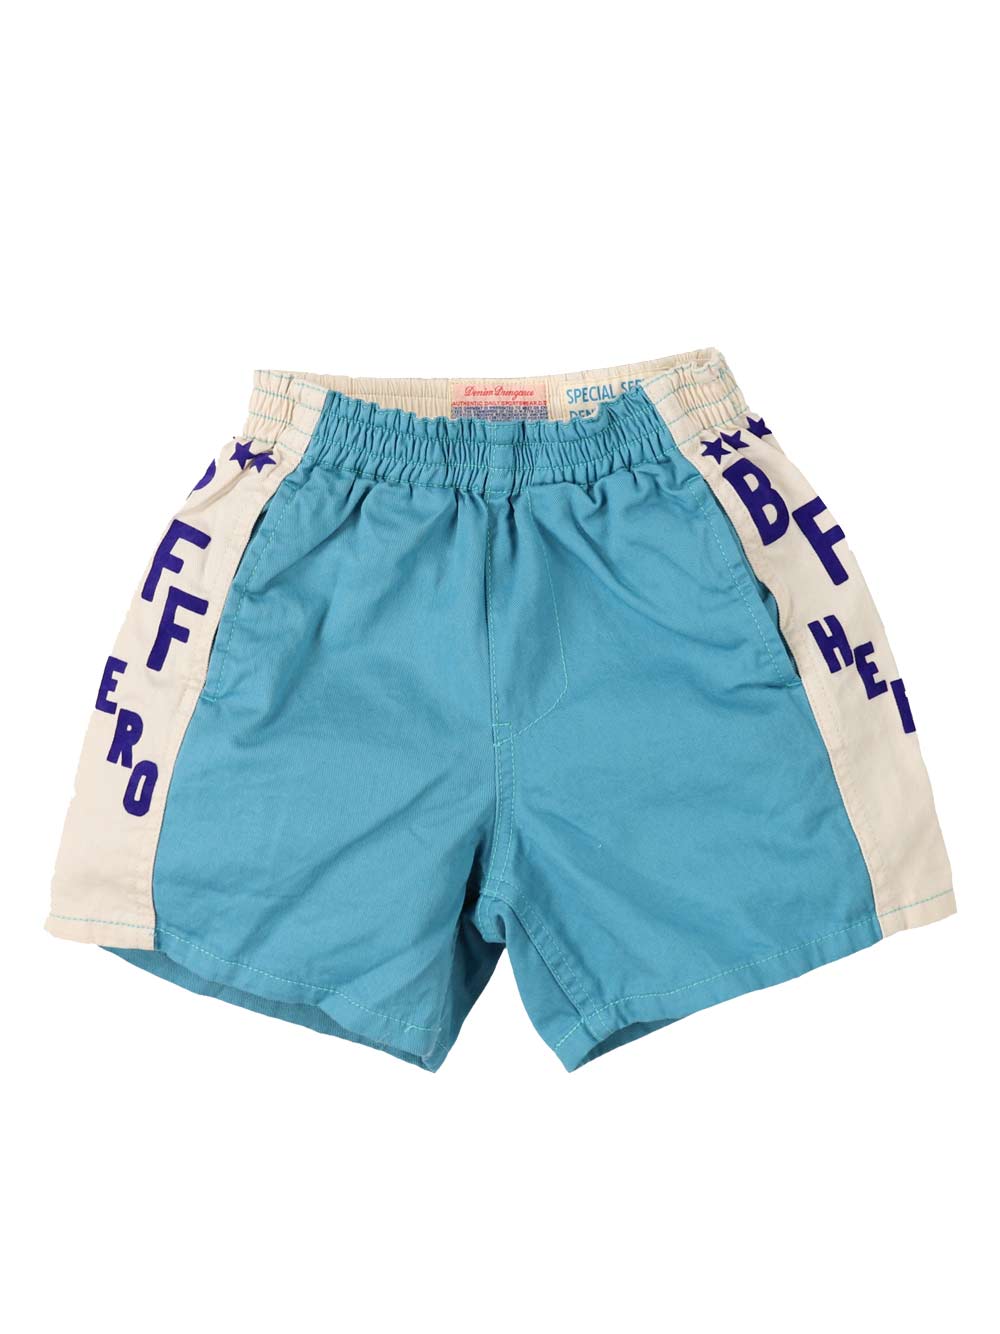 BFF Blue Shorts